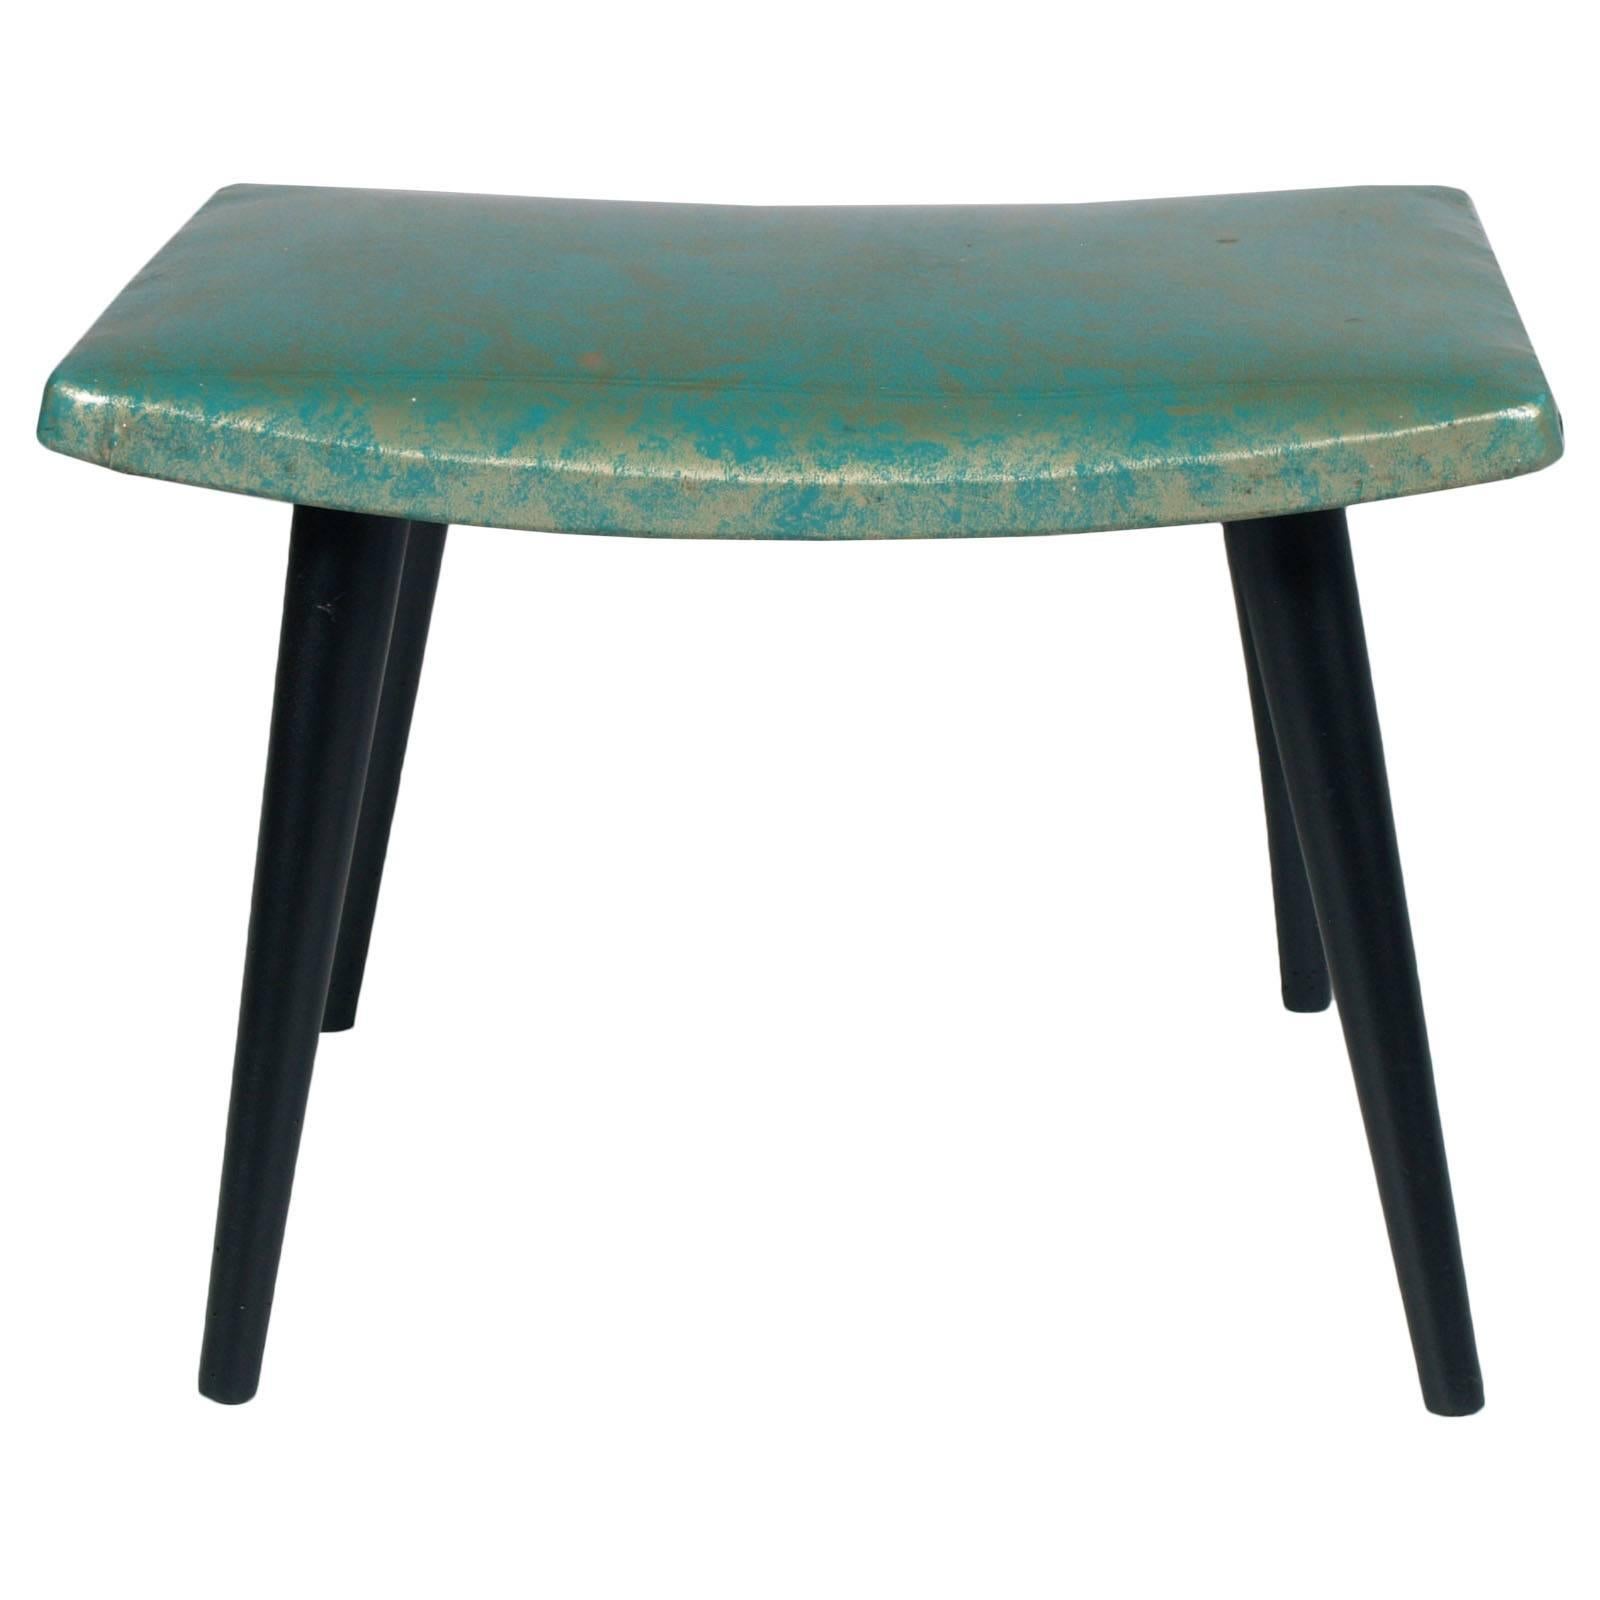 Mid-Century Modern stool Vittori Dassi style in ebonized walnut and upholstery plasticized fabric

Measure in cm: H 37 x W 45 x D 37.